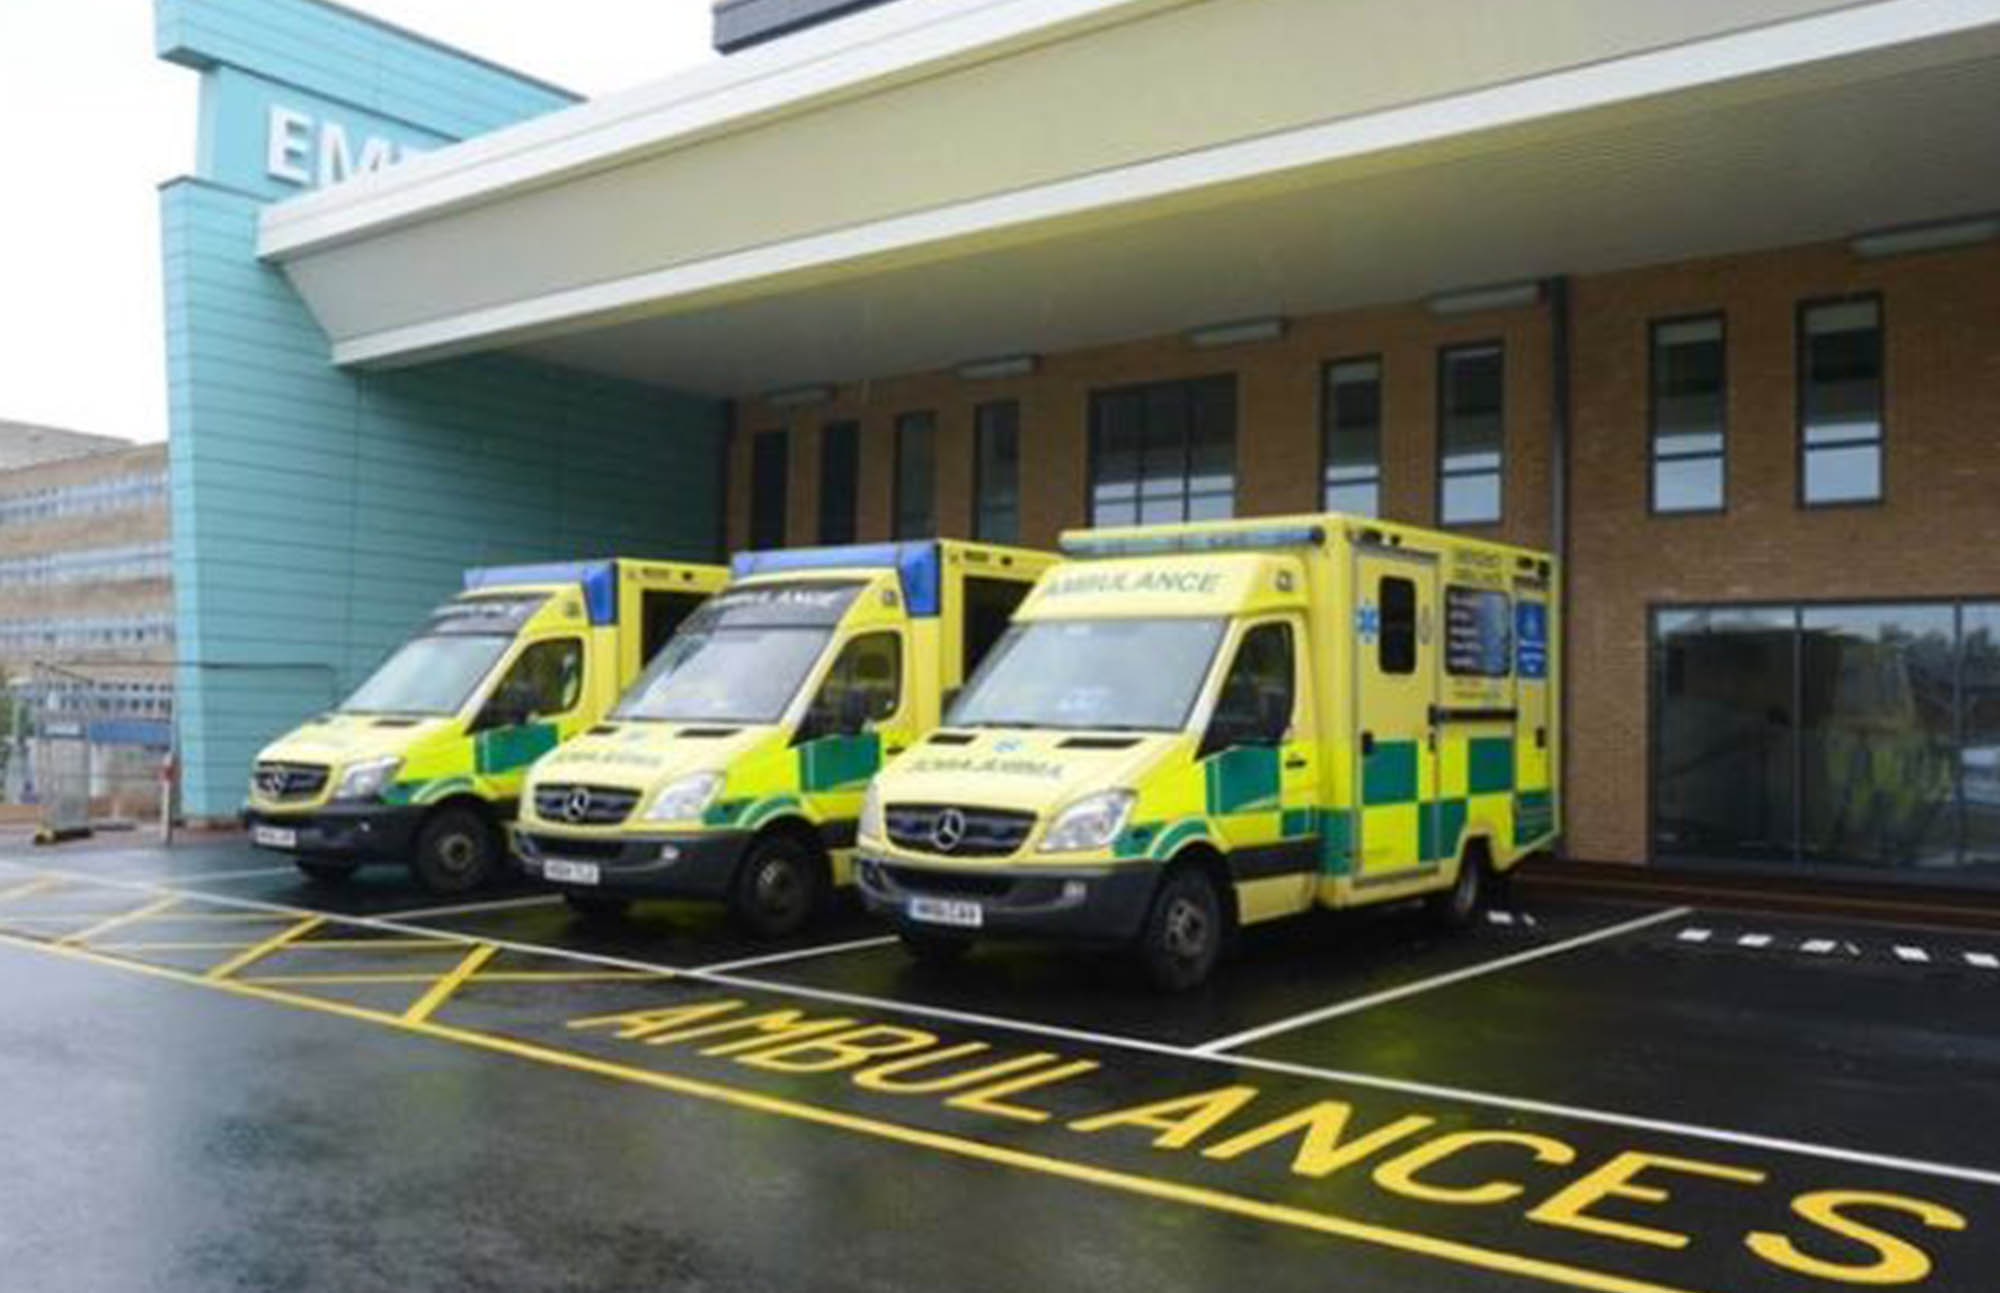 Sunderland Royal Hospital Emergency Department